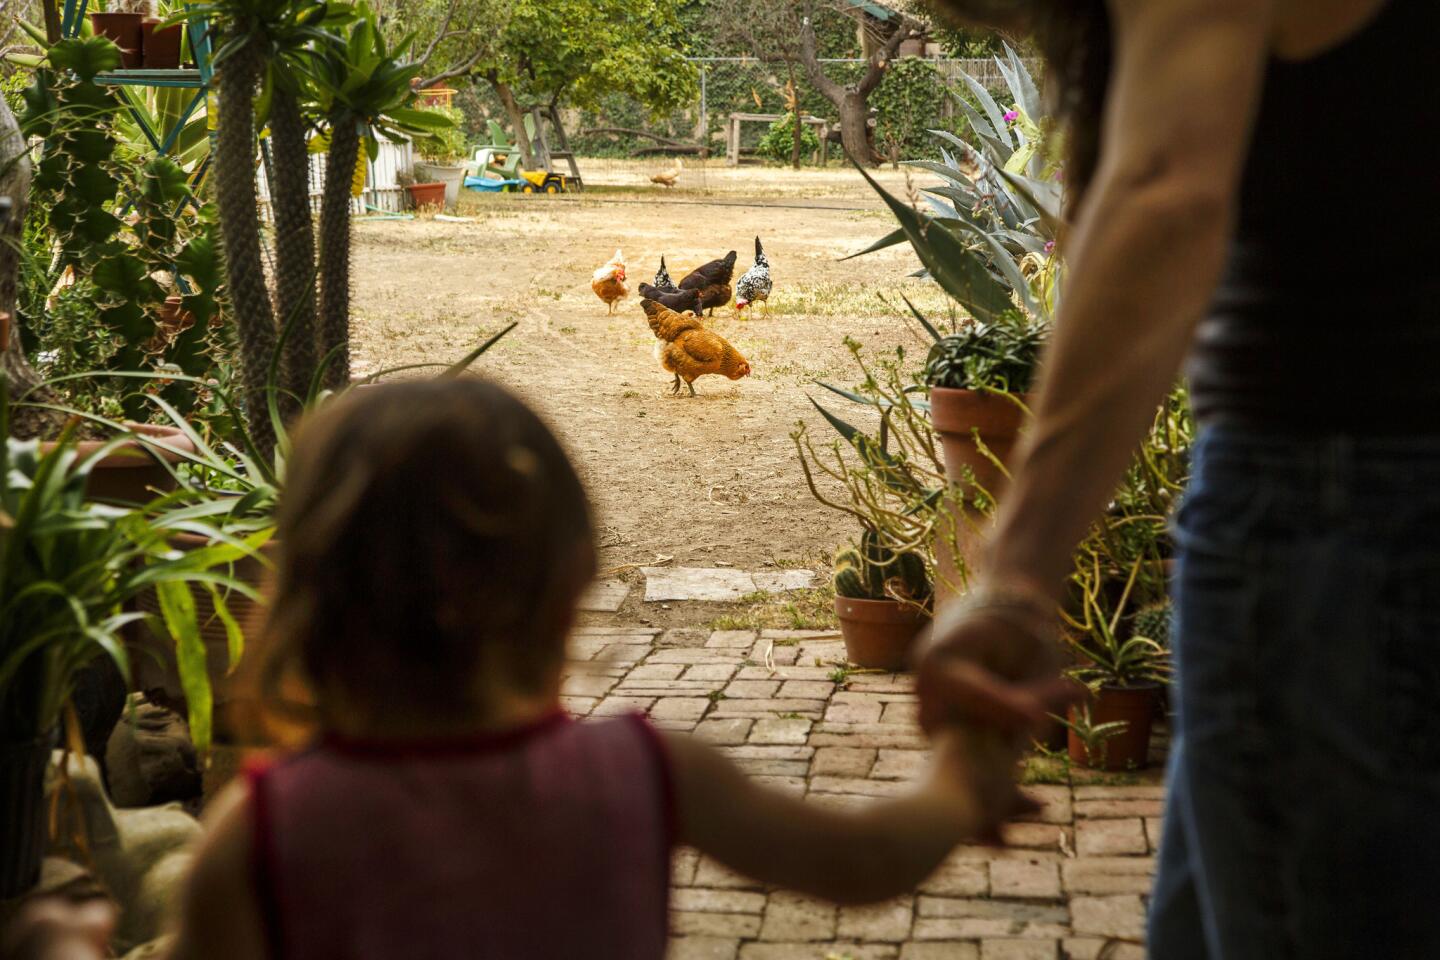 Chicken hobby farm